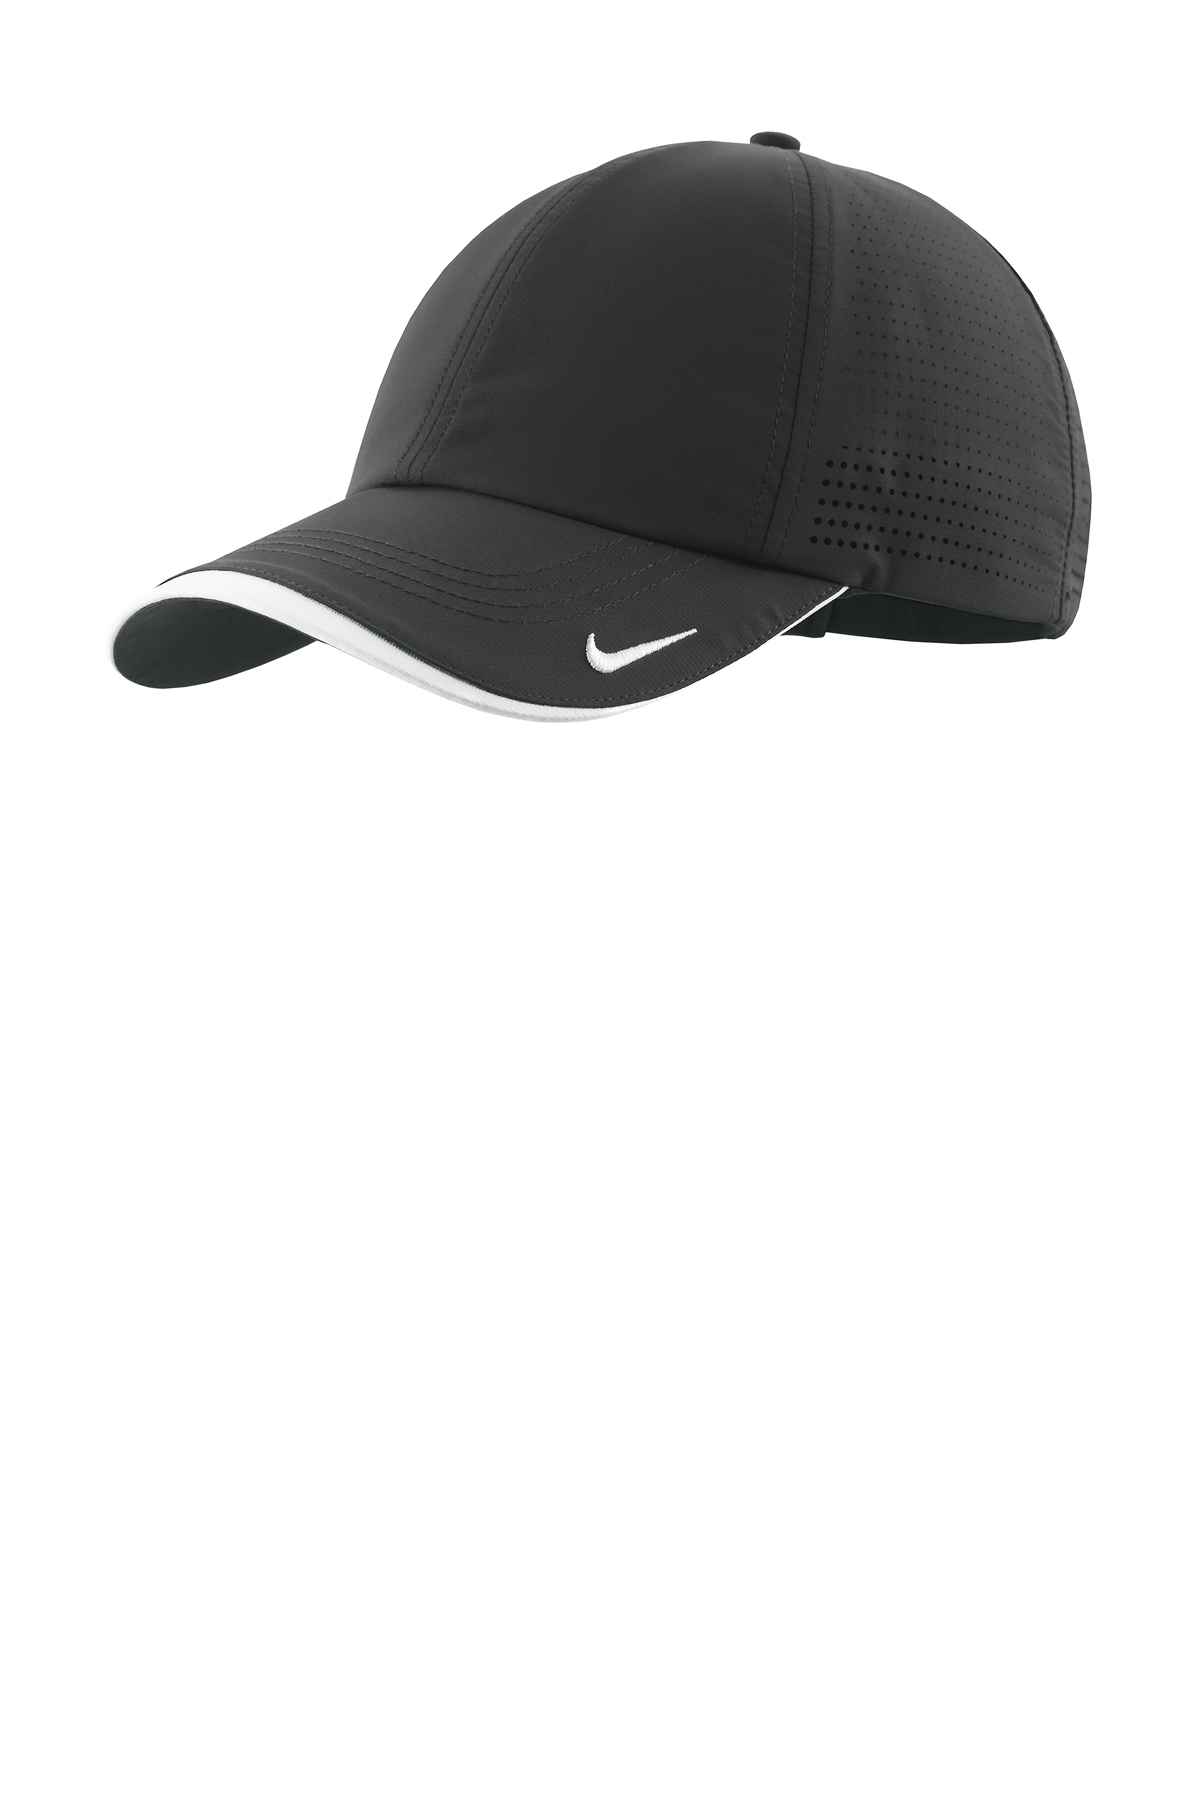 Nike Dri-Fit Perforated Cap - NKFB6445